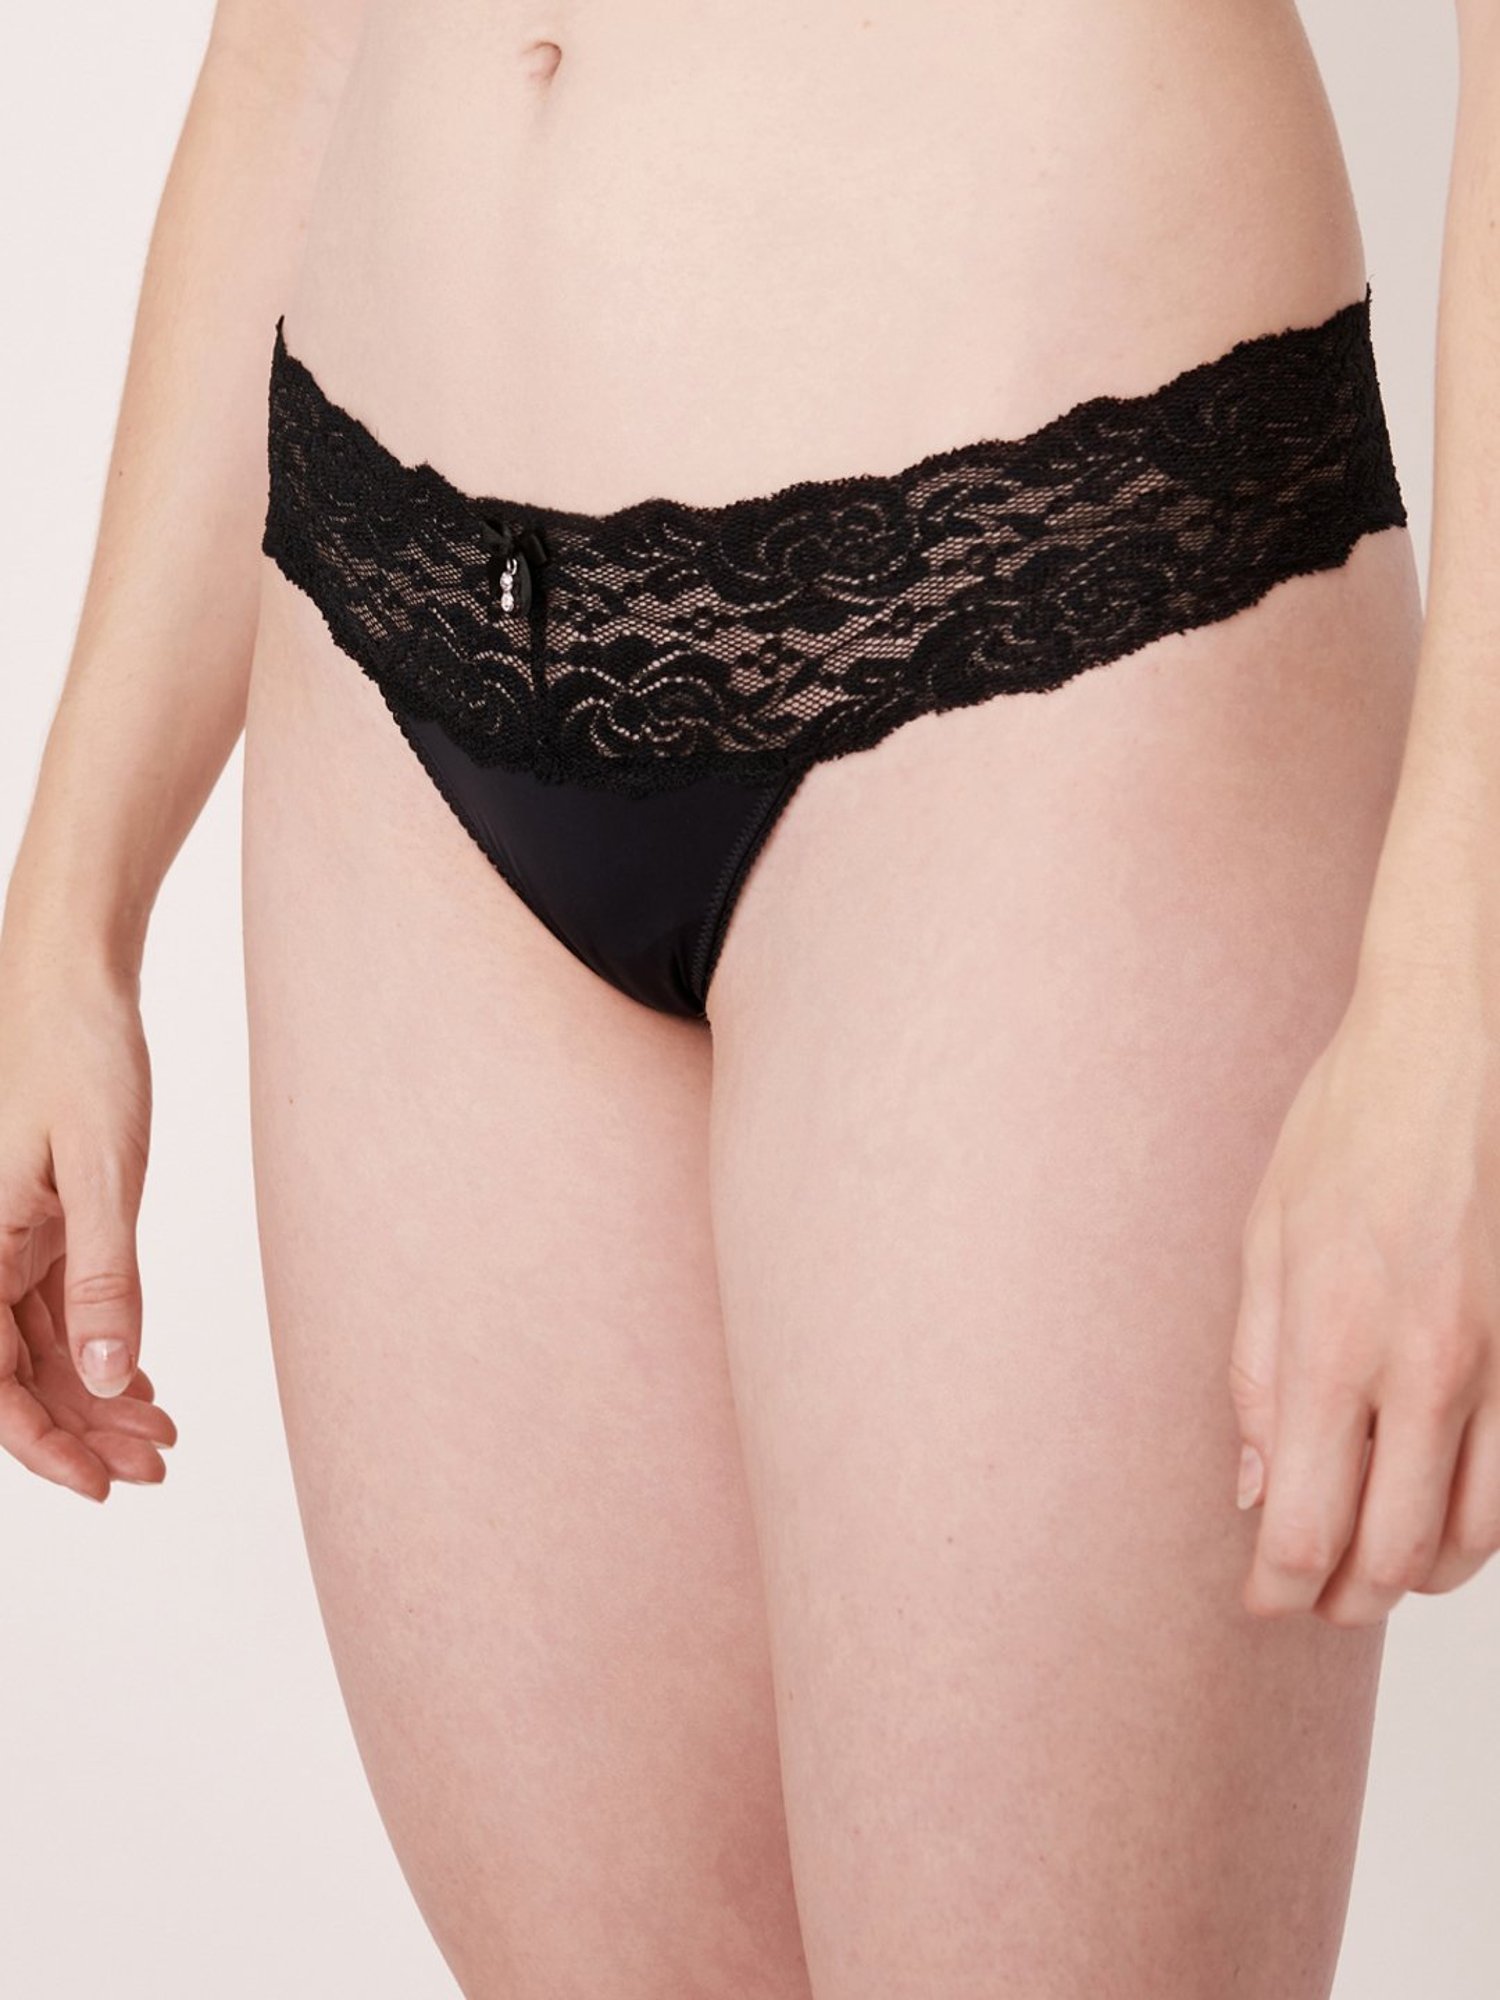 Buy Da Intimo Black Nylon Thong Panty for Women Online @ Tata CLiQ